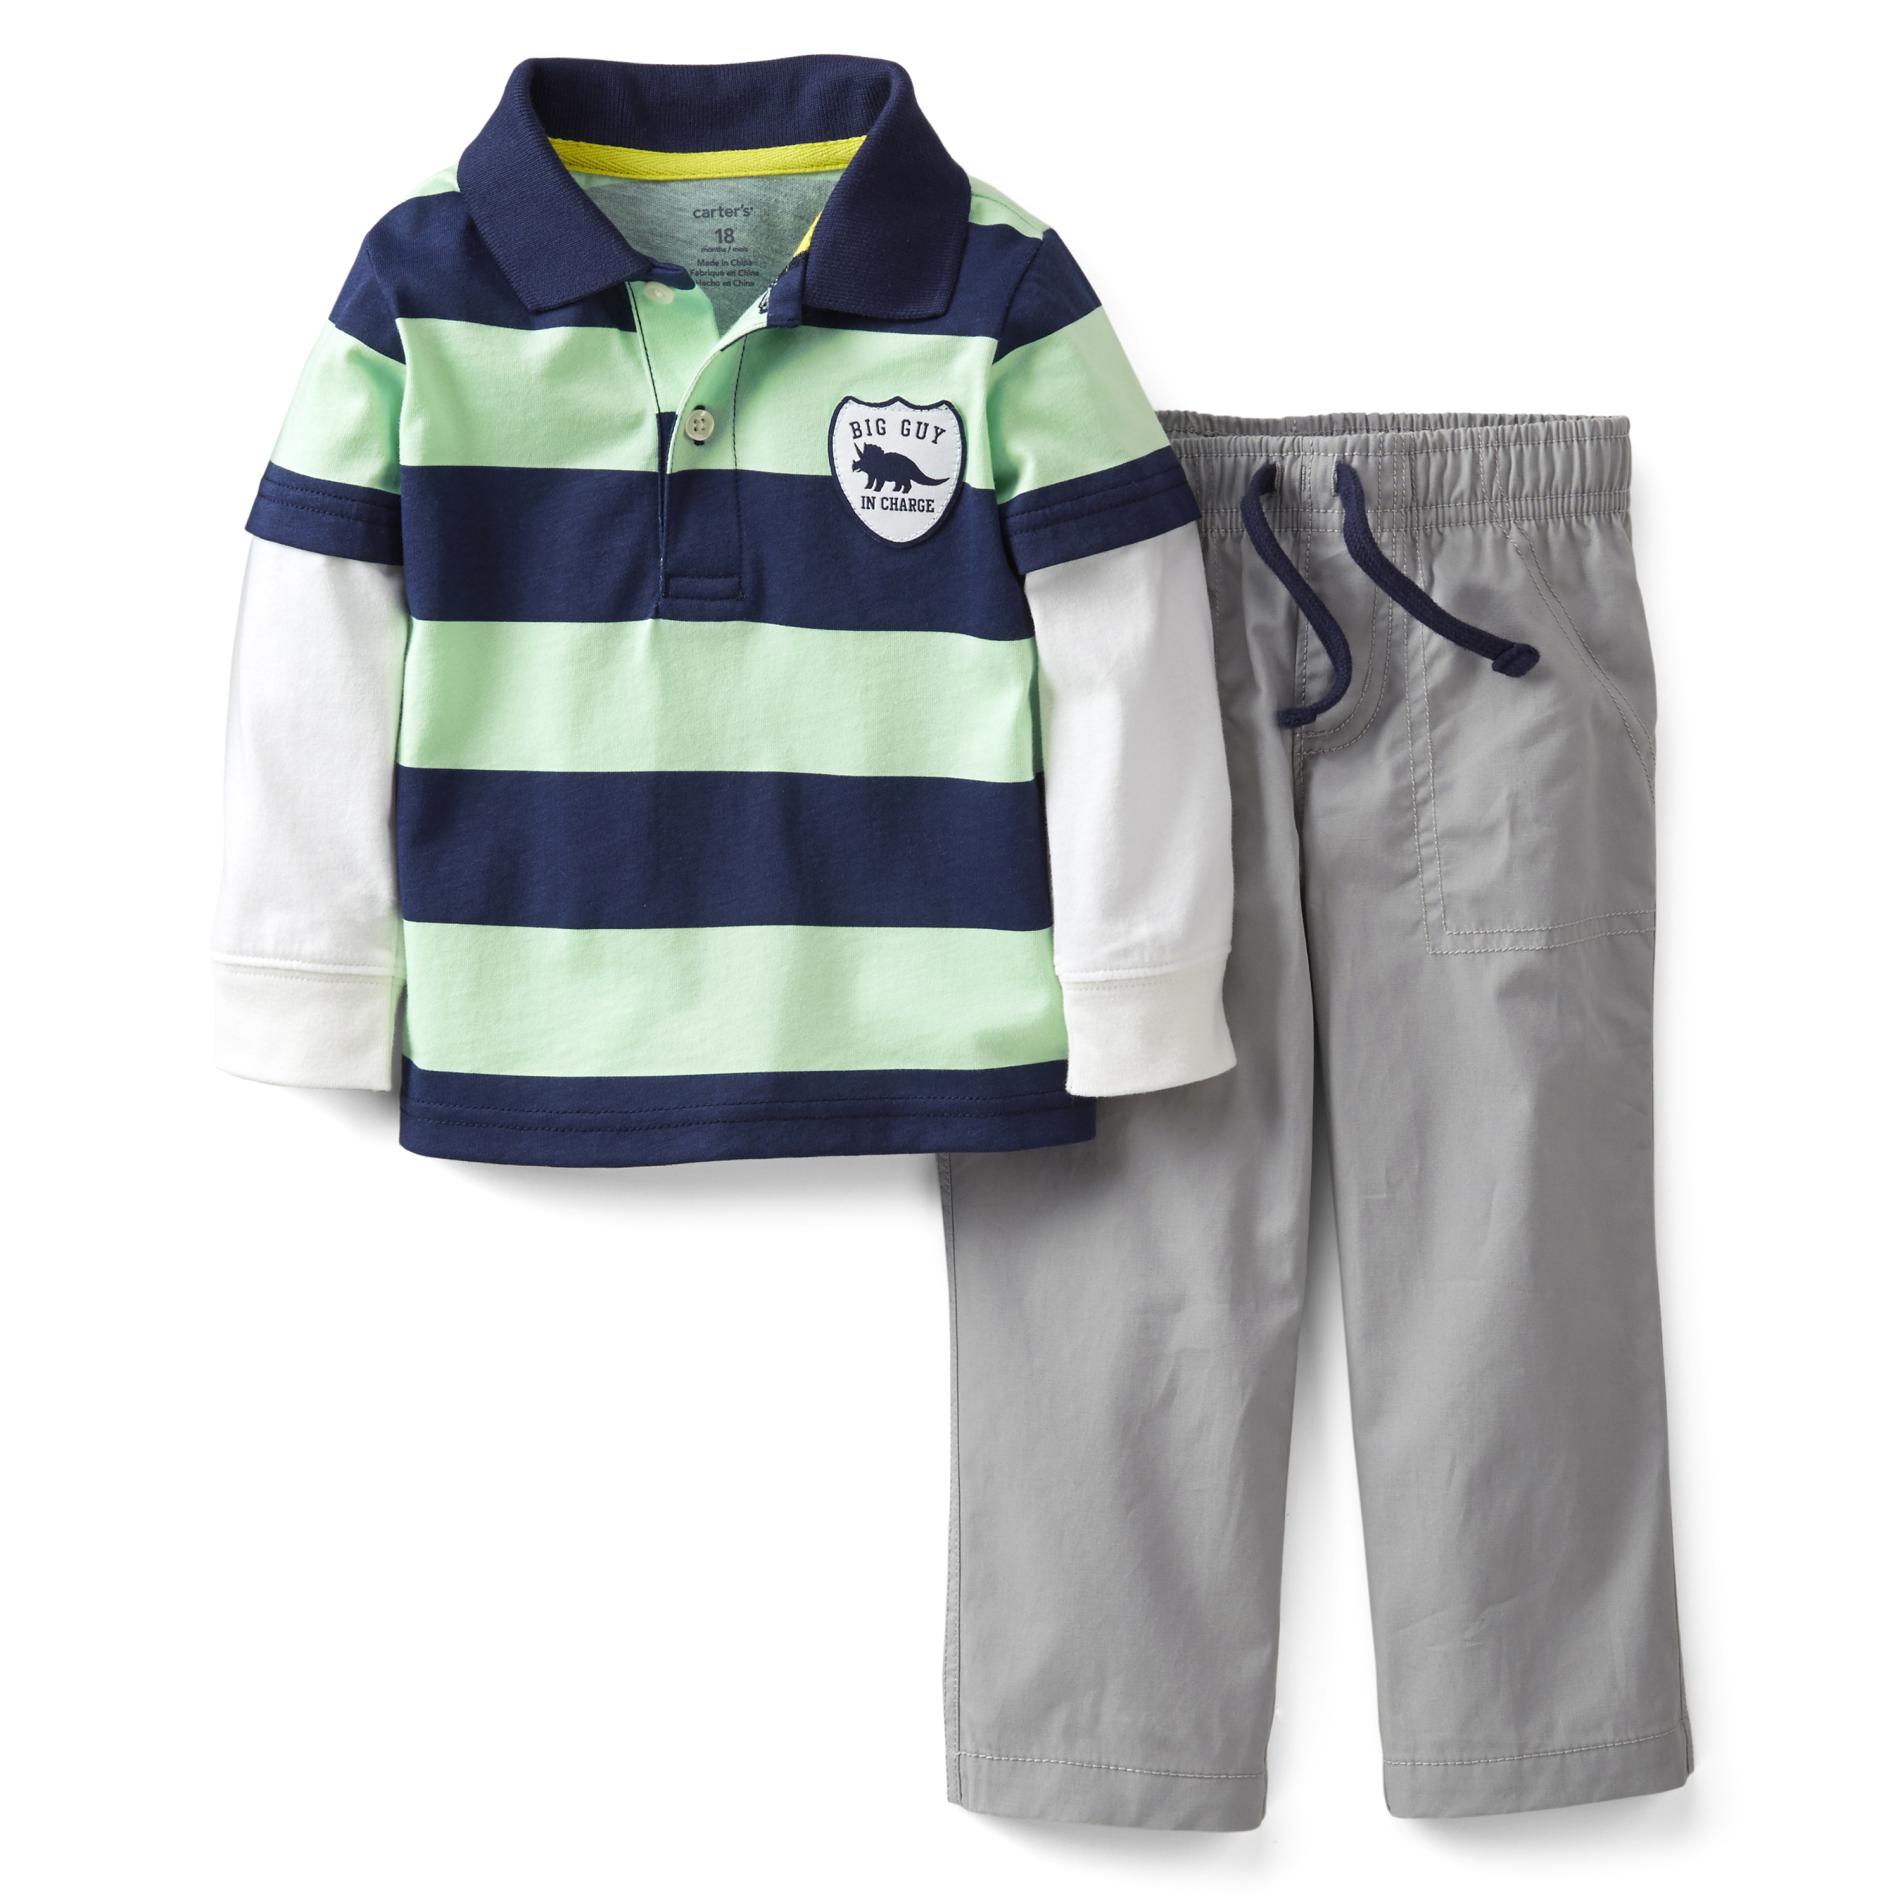 Carter's Newborn & Infant Boy's Layered-Look Polo Shirt & Pants - Big Guy